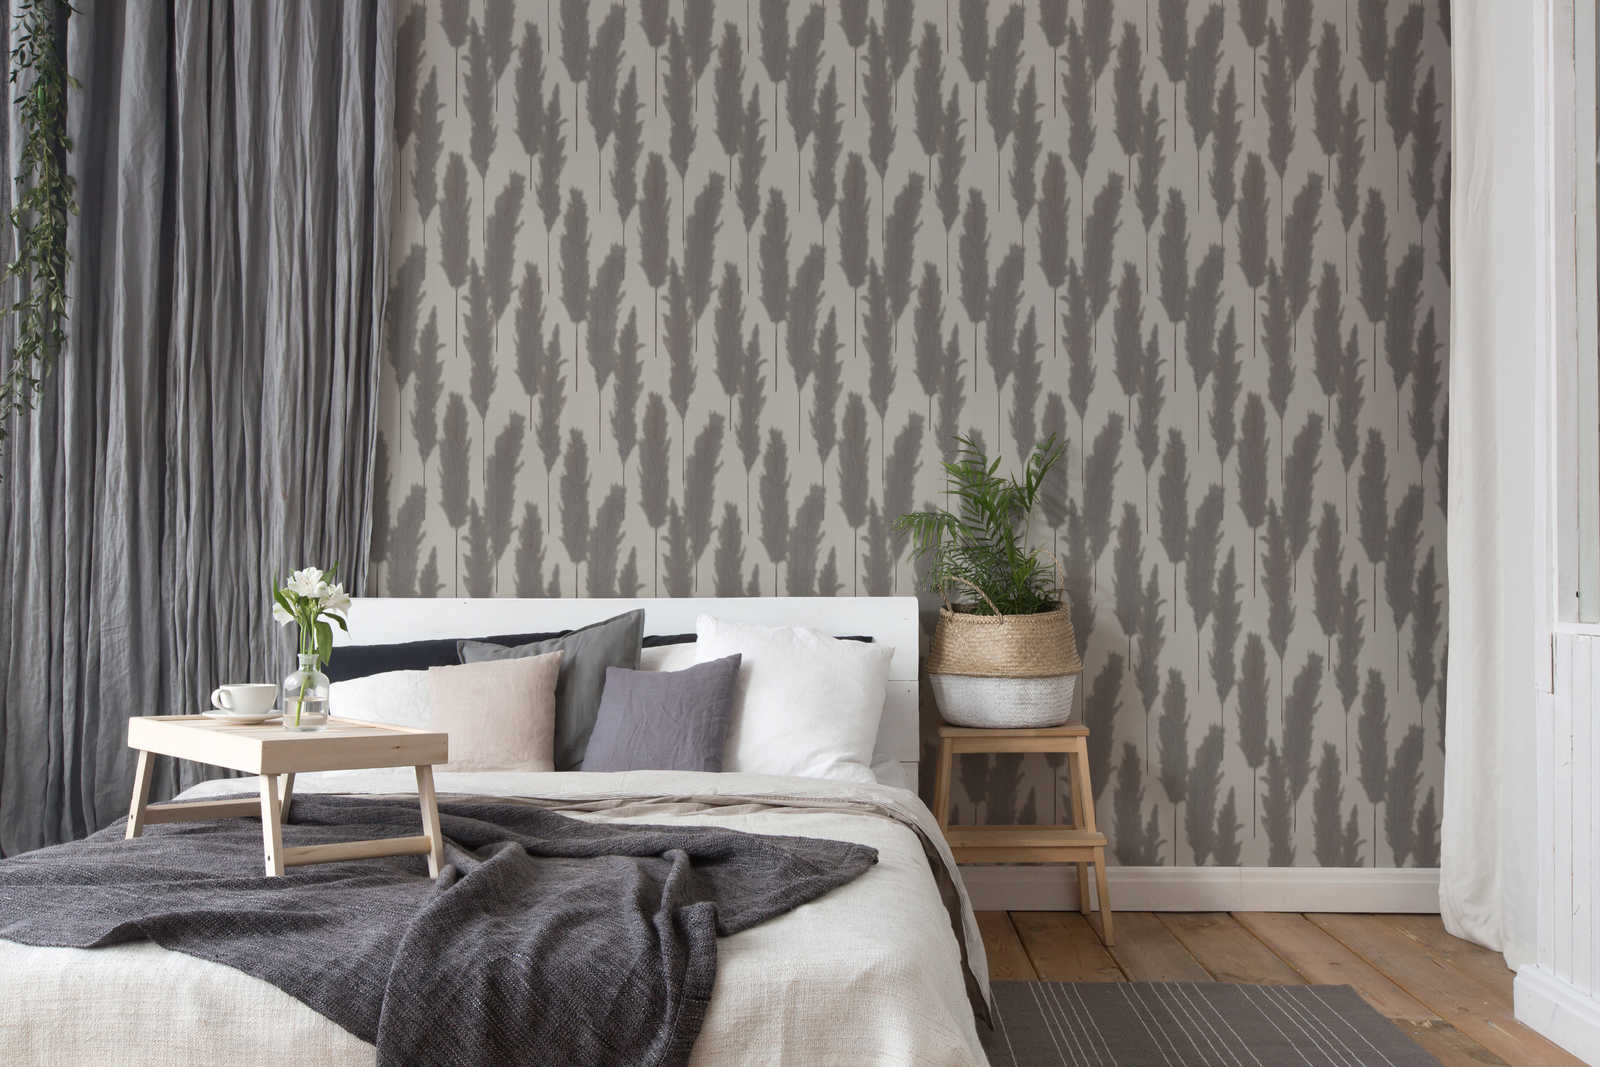             Nature design wallpaper pampas grass pattern - grey, white
        